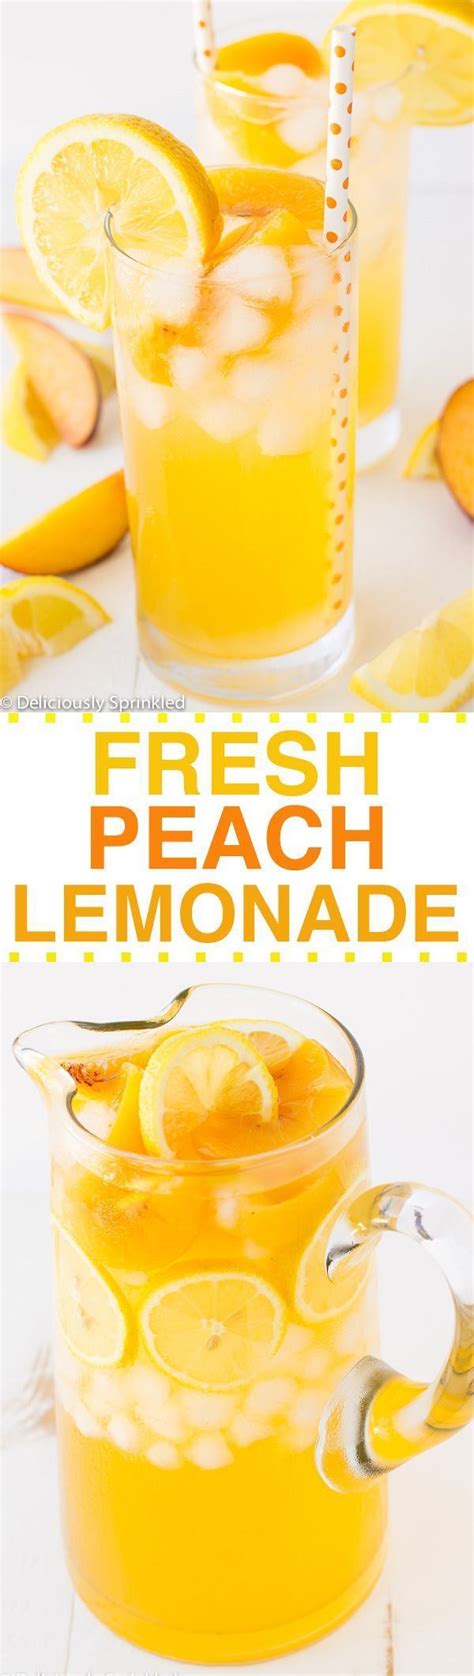 Fresh Peach Lemonade Recipe Super Easy To Make And Taste So Good